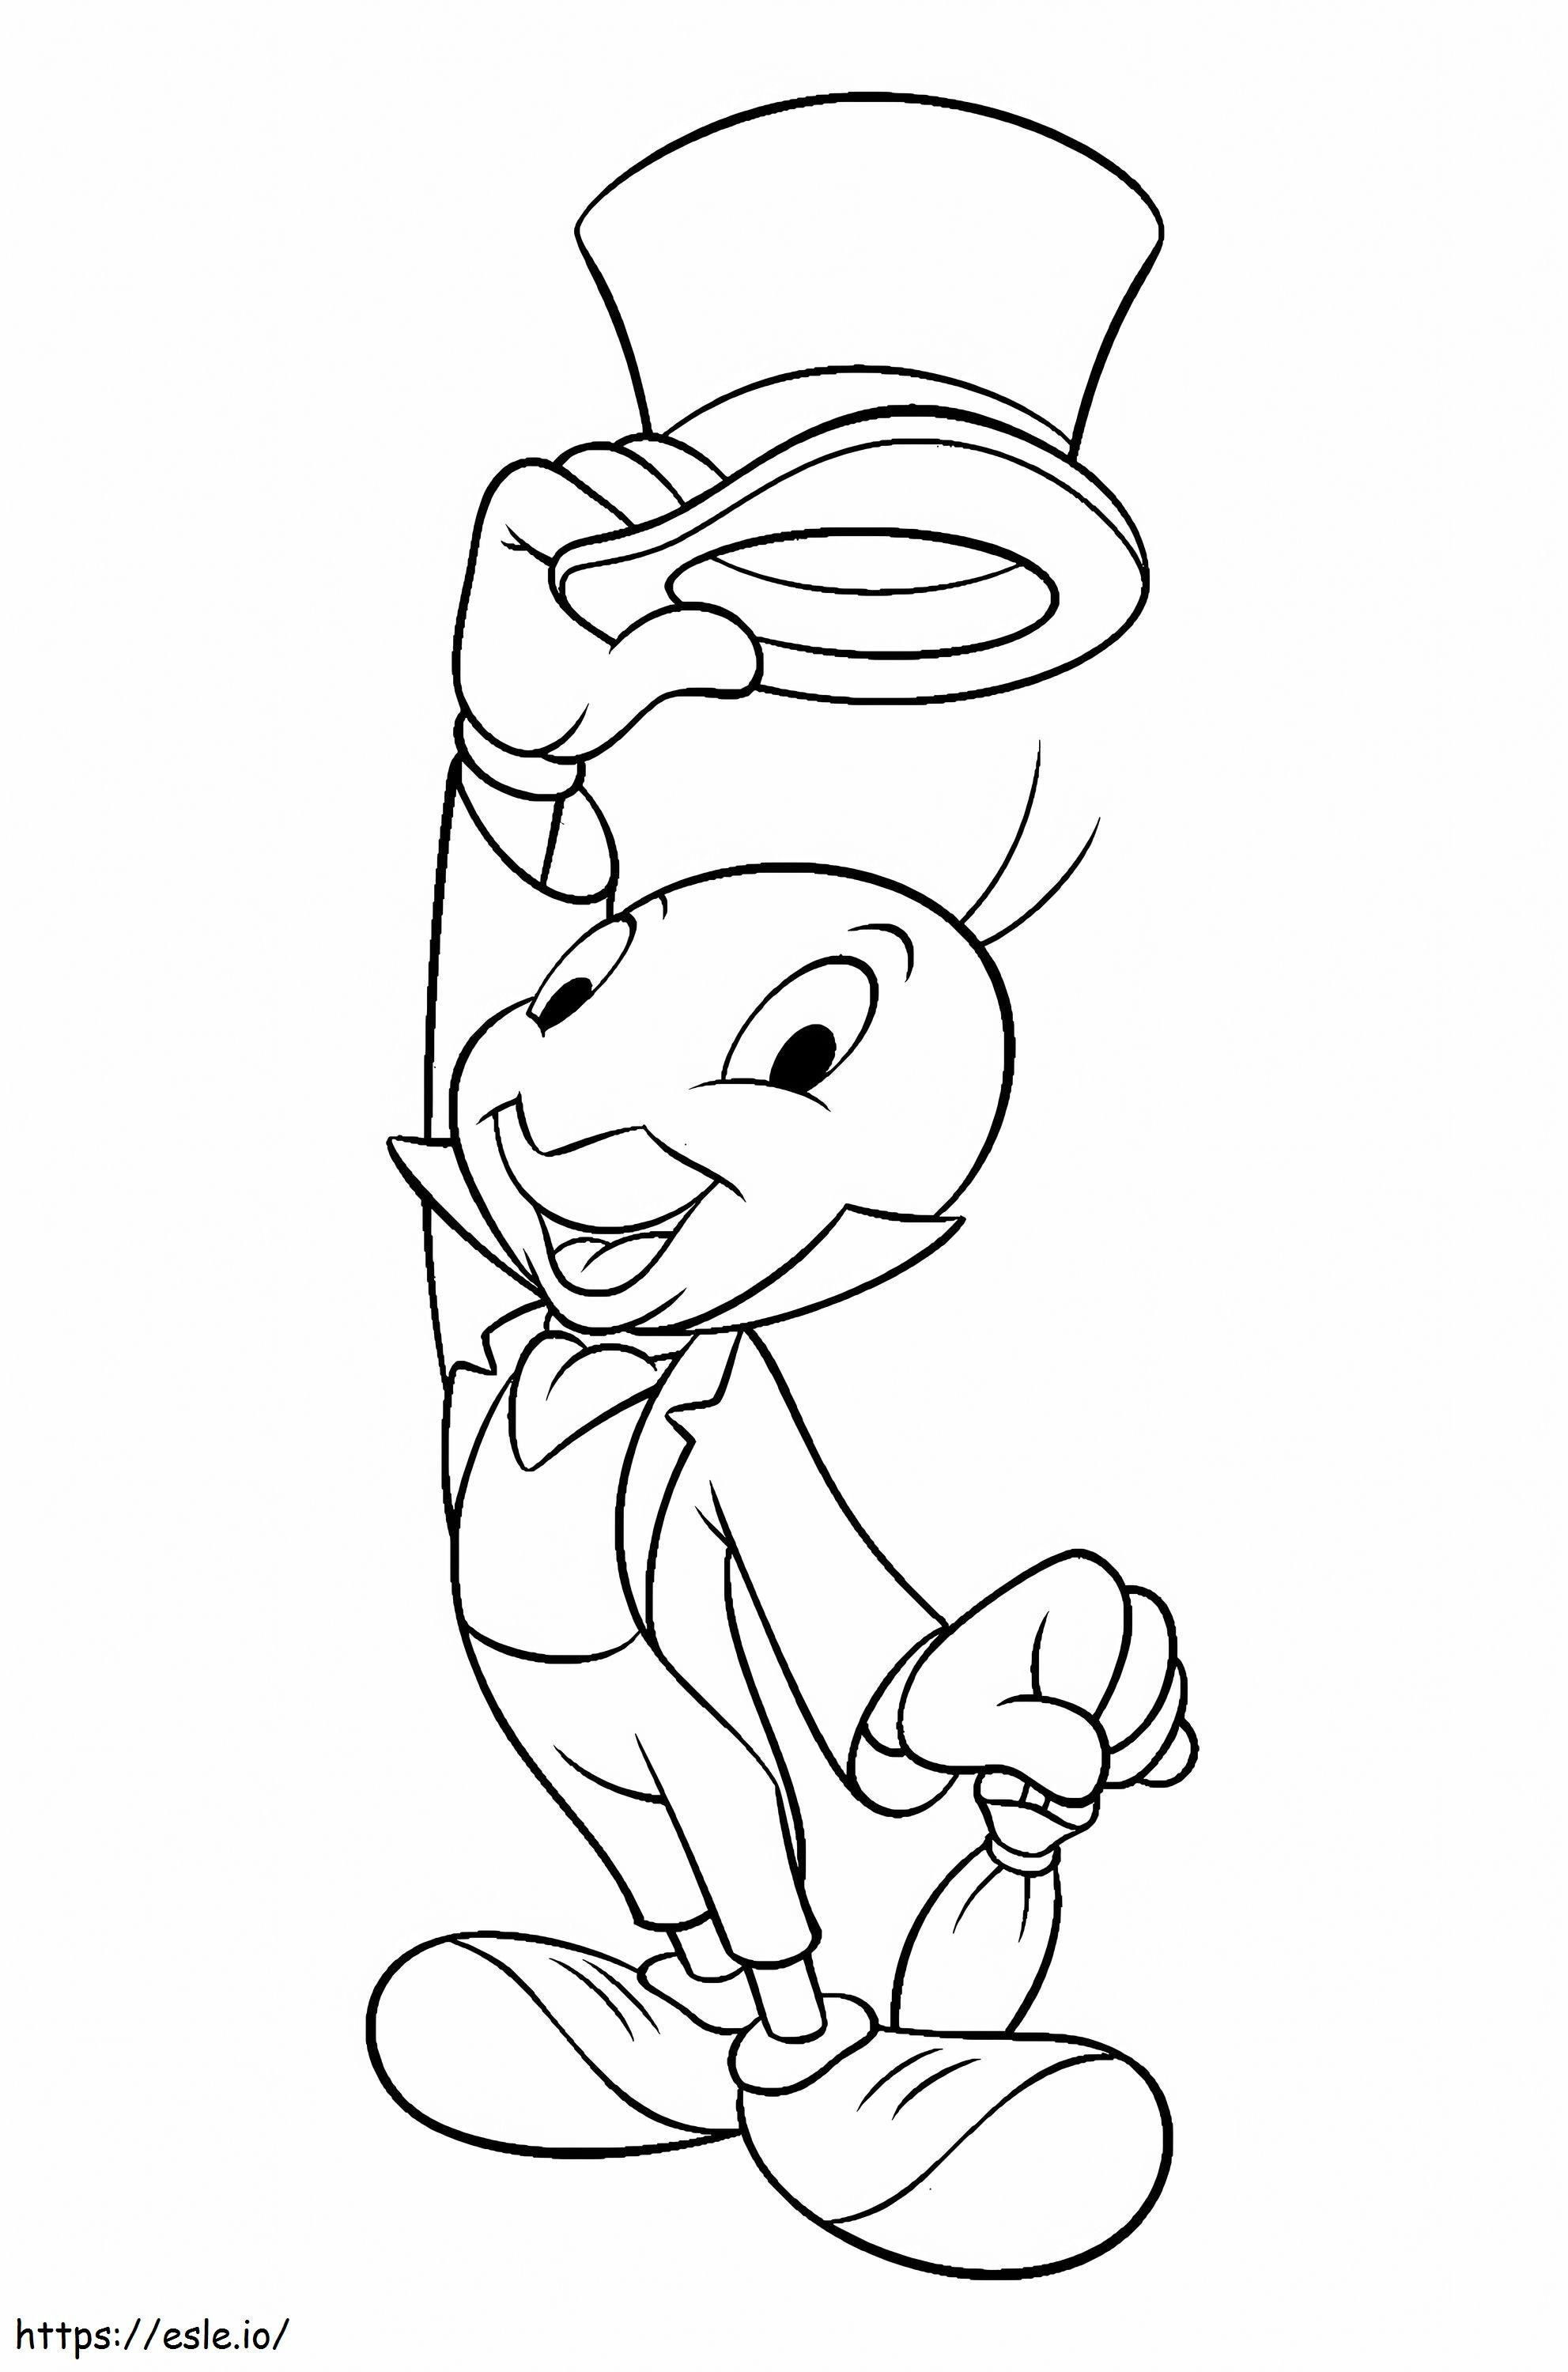 1545725391 Disney Jiminy Cricket 14 I Stampabile gratuitamente Disney Jiminy Cricket Natale per bambini Stampa il cartone animato Disney Jiminy Cricket Natale per Presc da colorare